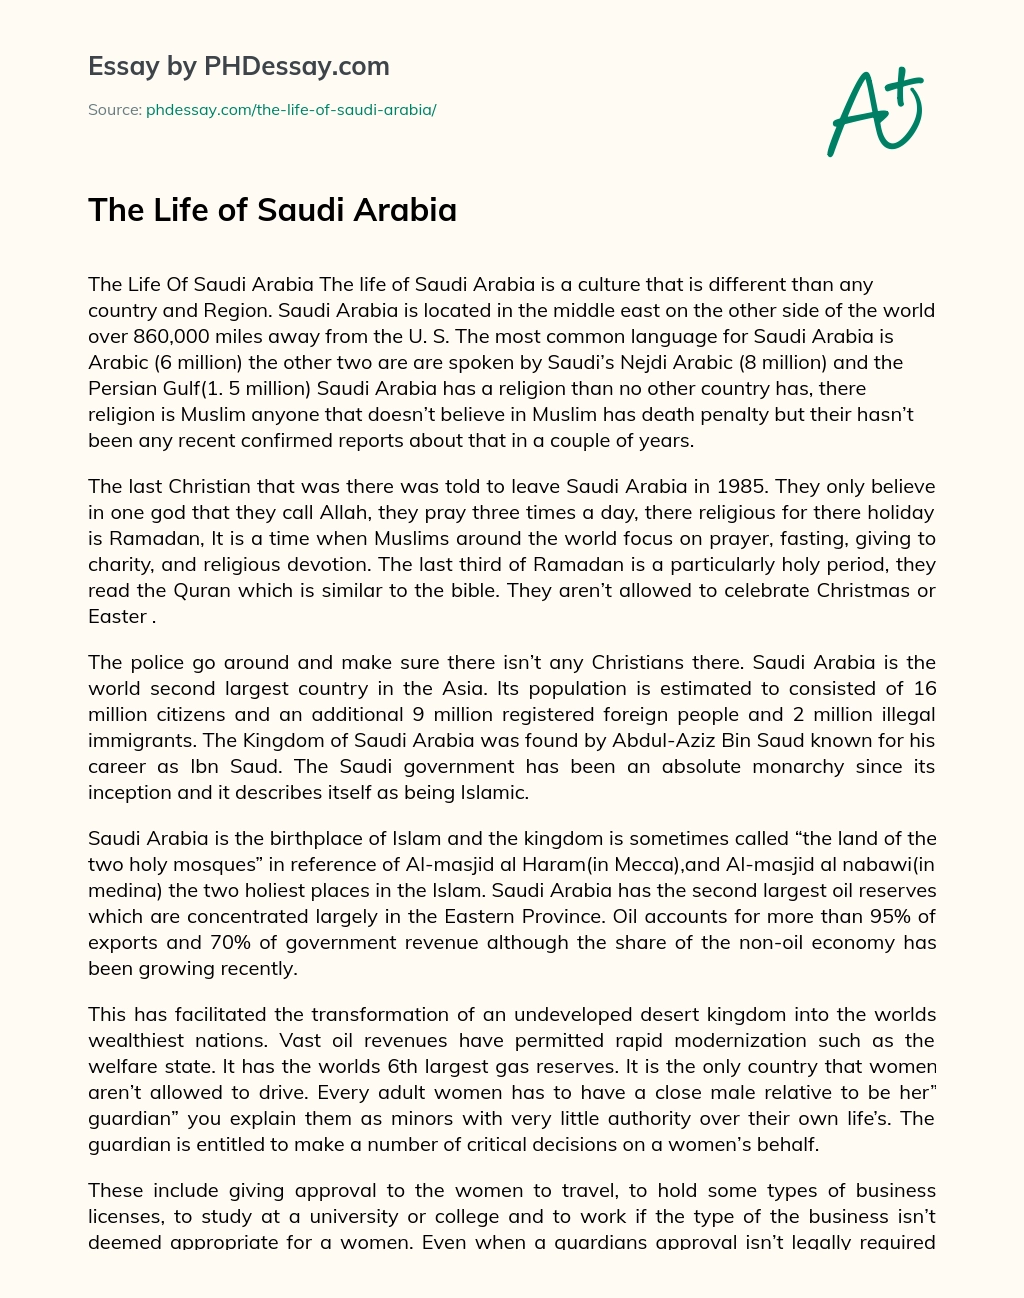 The Life of Saudi Arabia essay